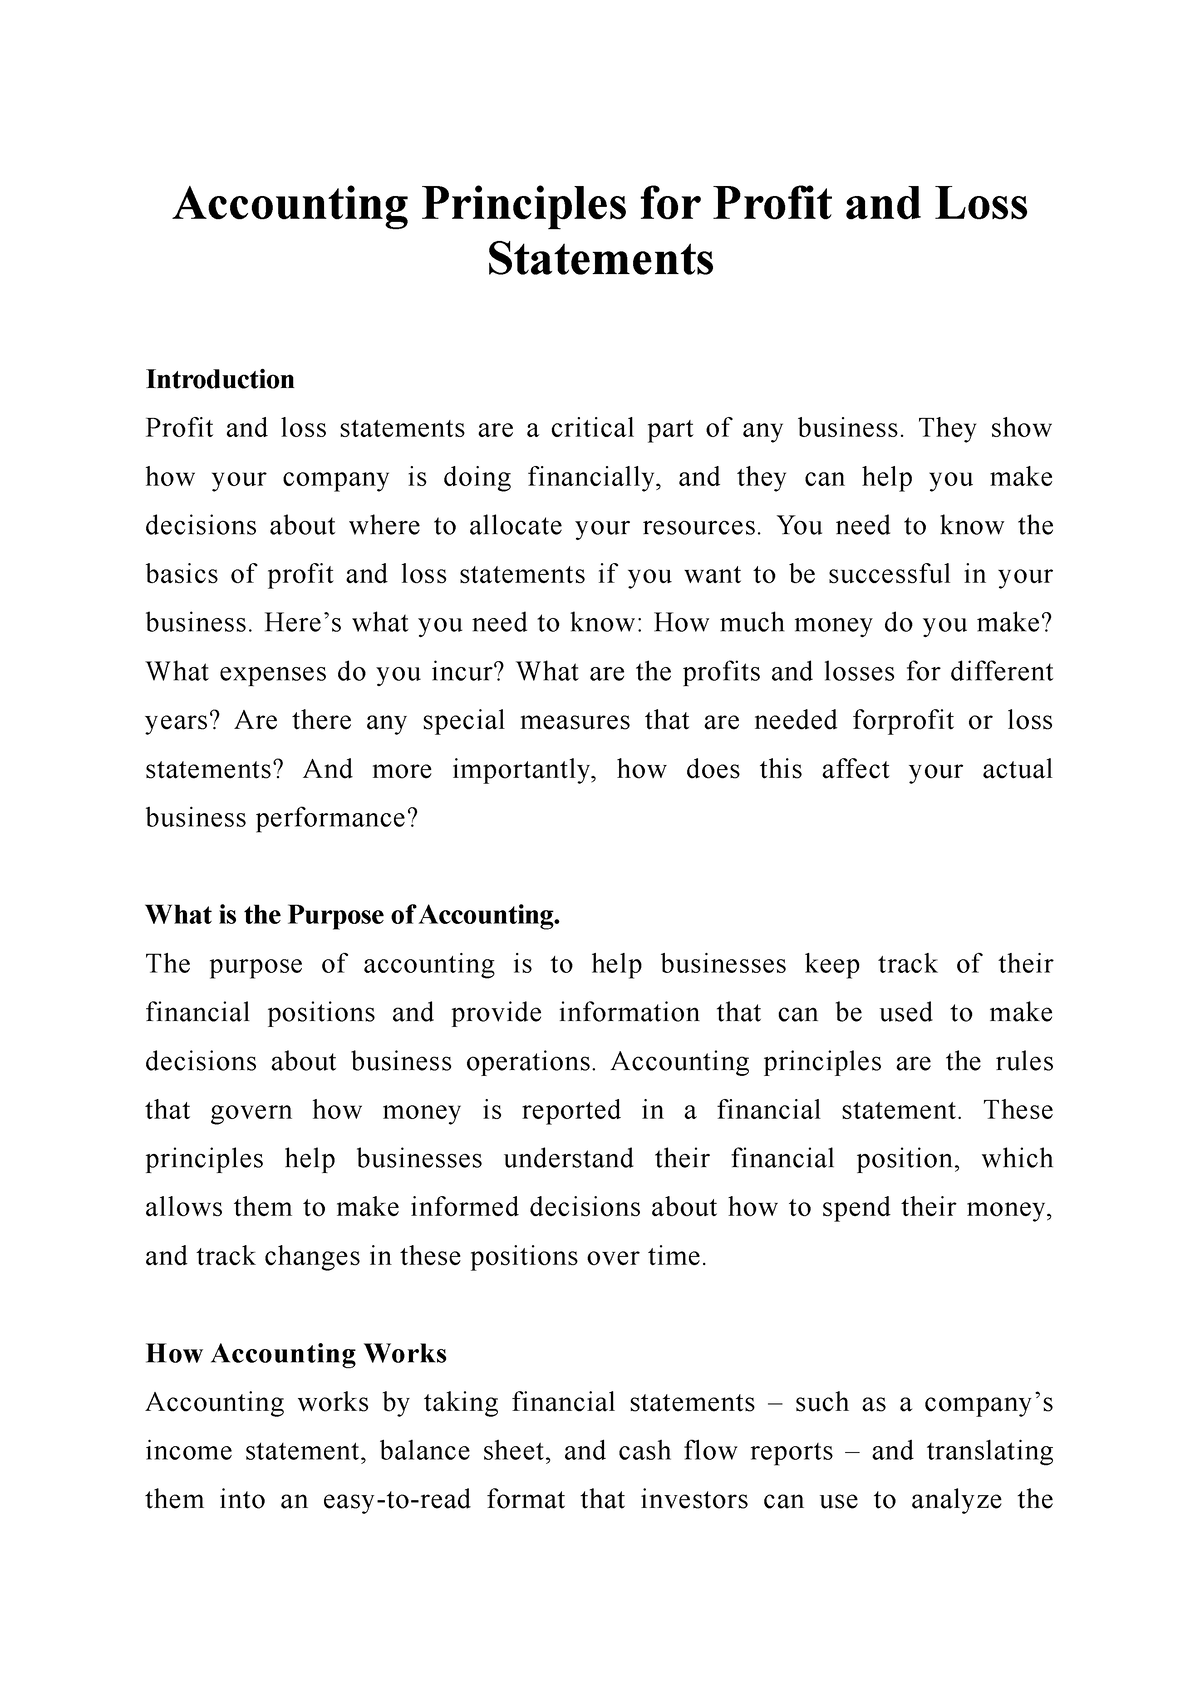 Accounting Principles For Profit And Loss Statements Accounting Principles For Profit And Loss 6208